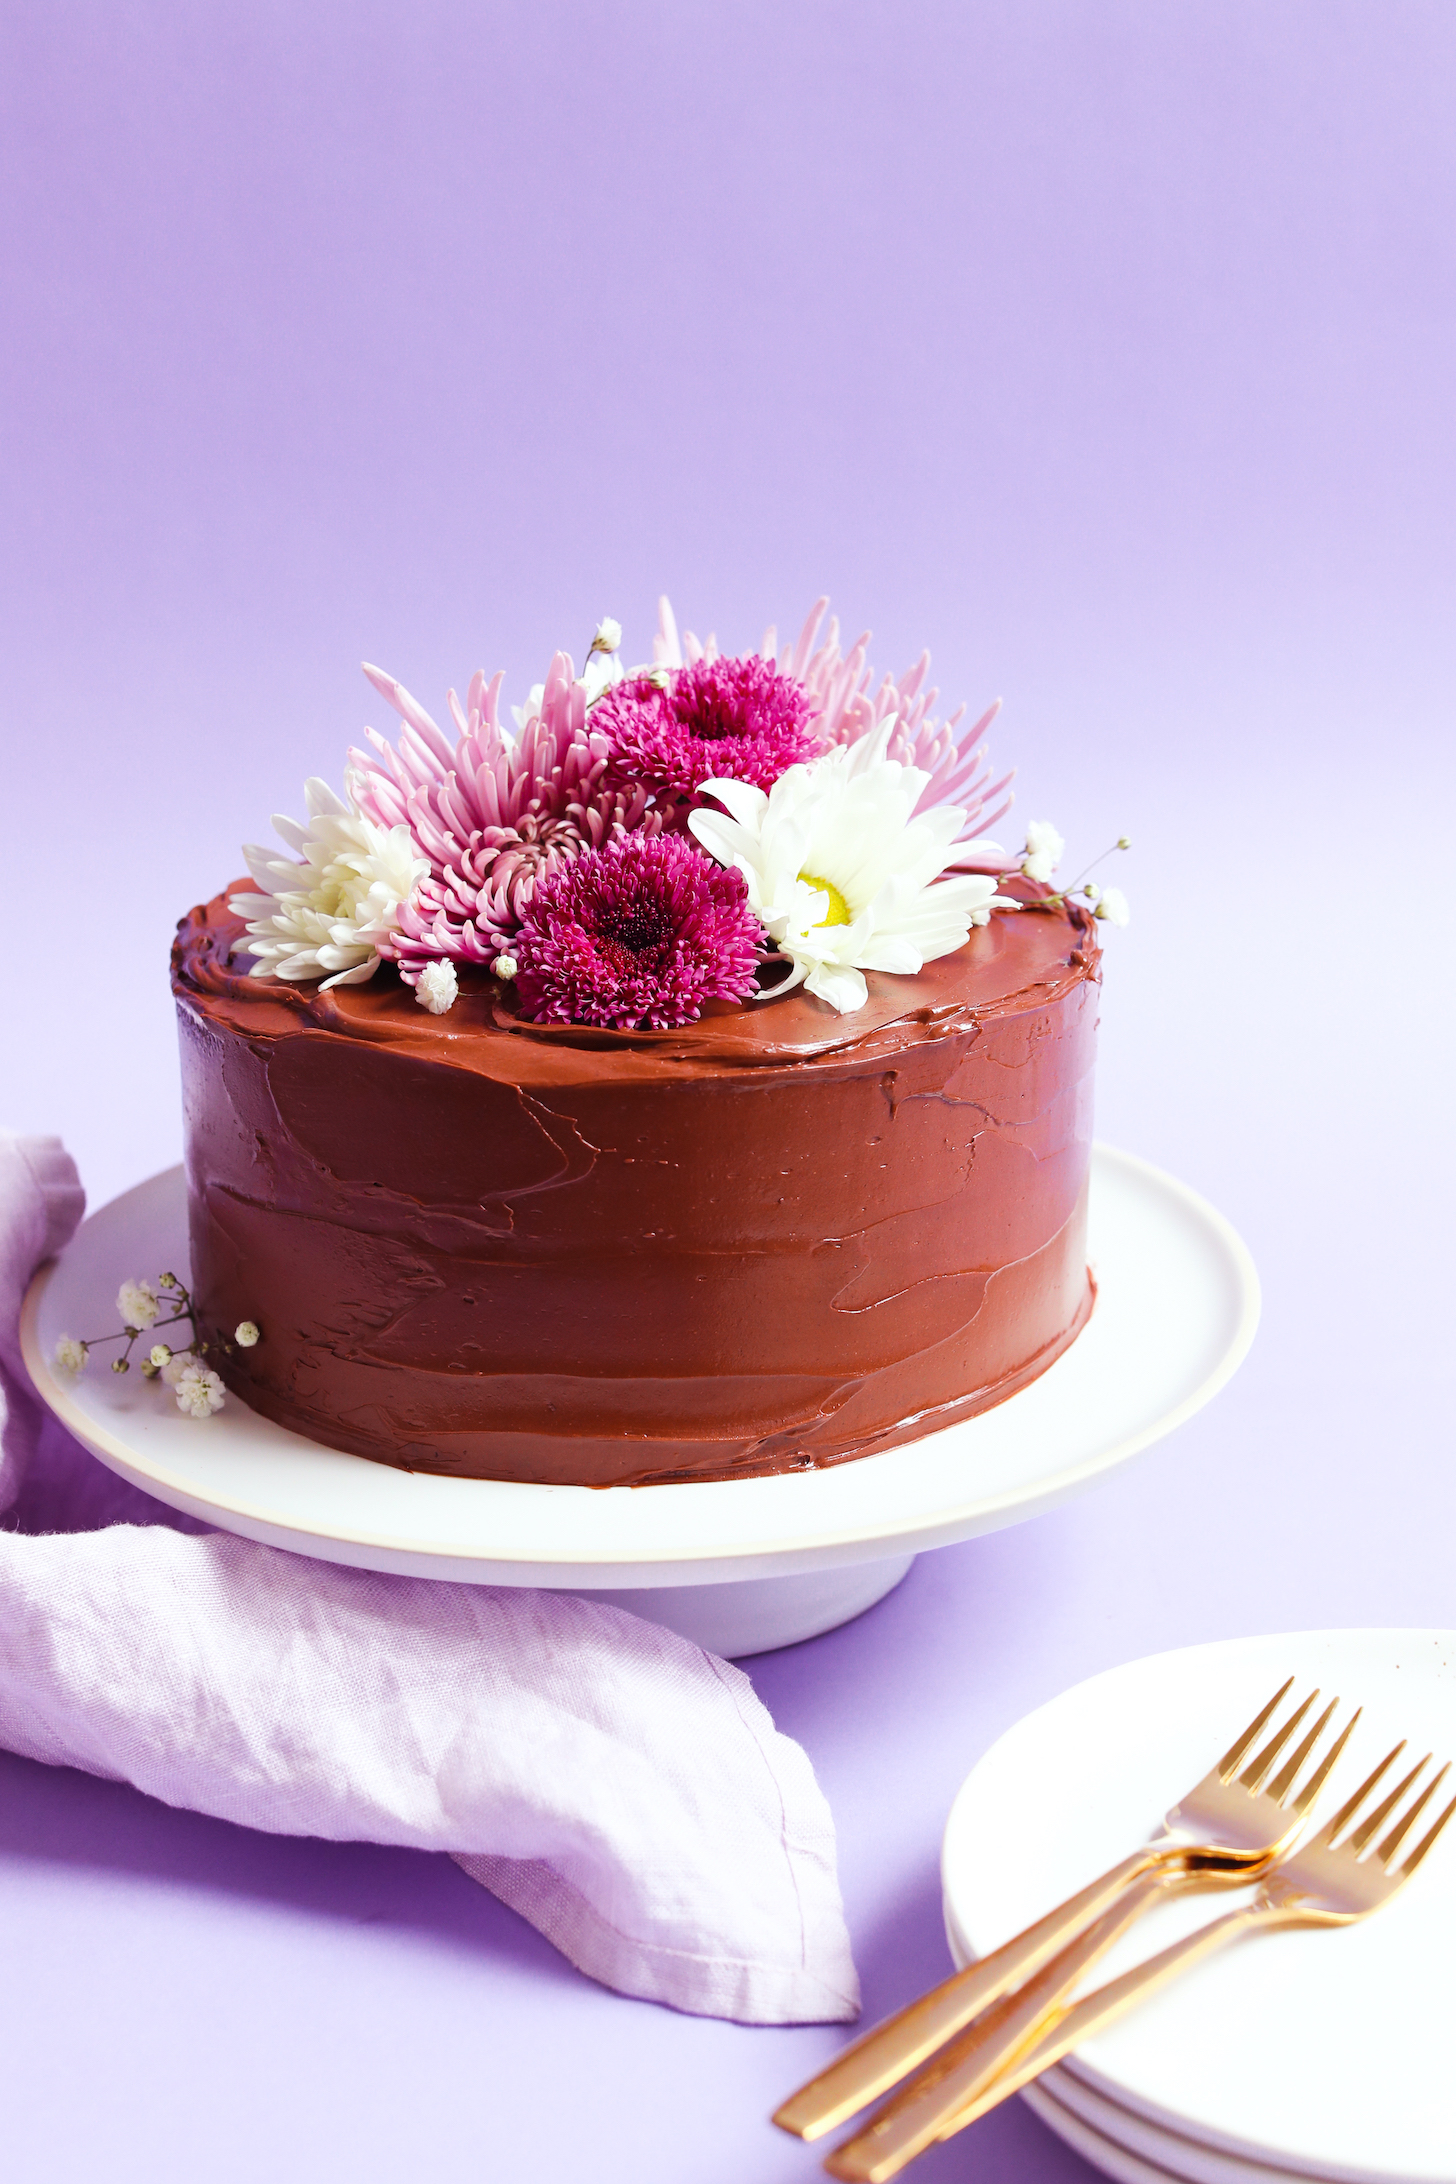 Vegan gluten-free chocolate cake with vegan chocolate ganache frosting and flowers